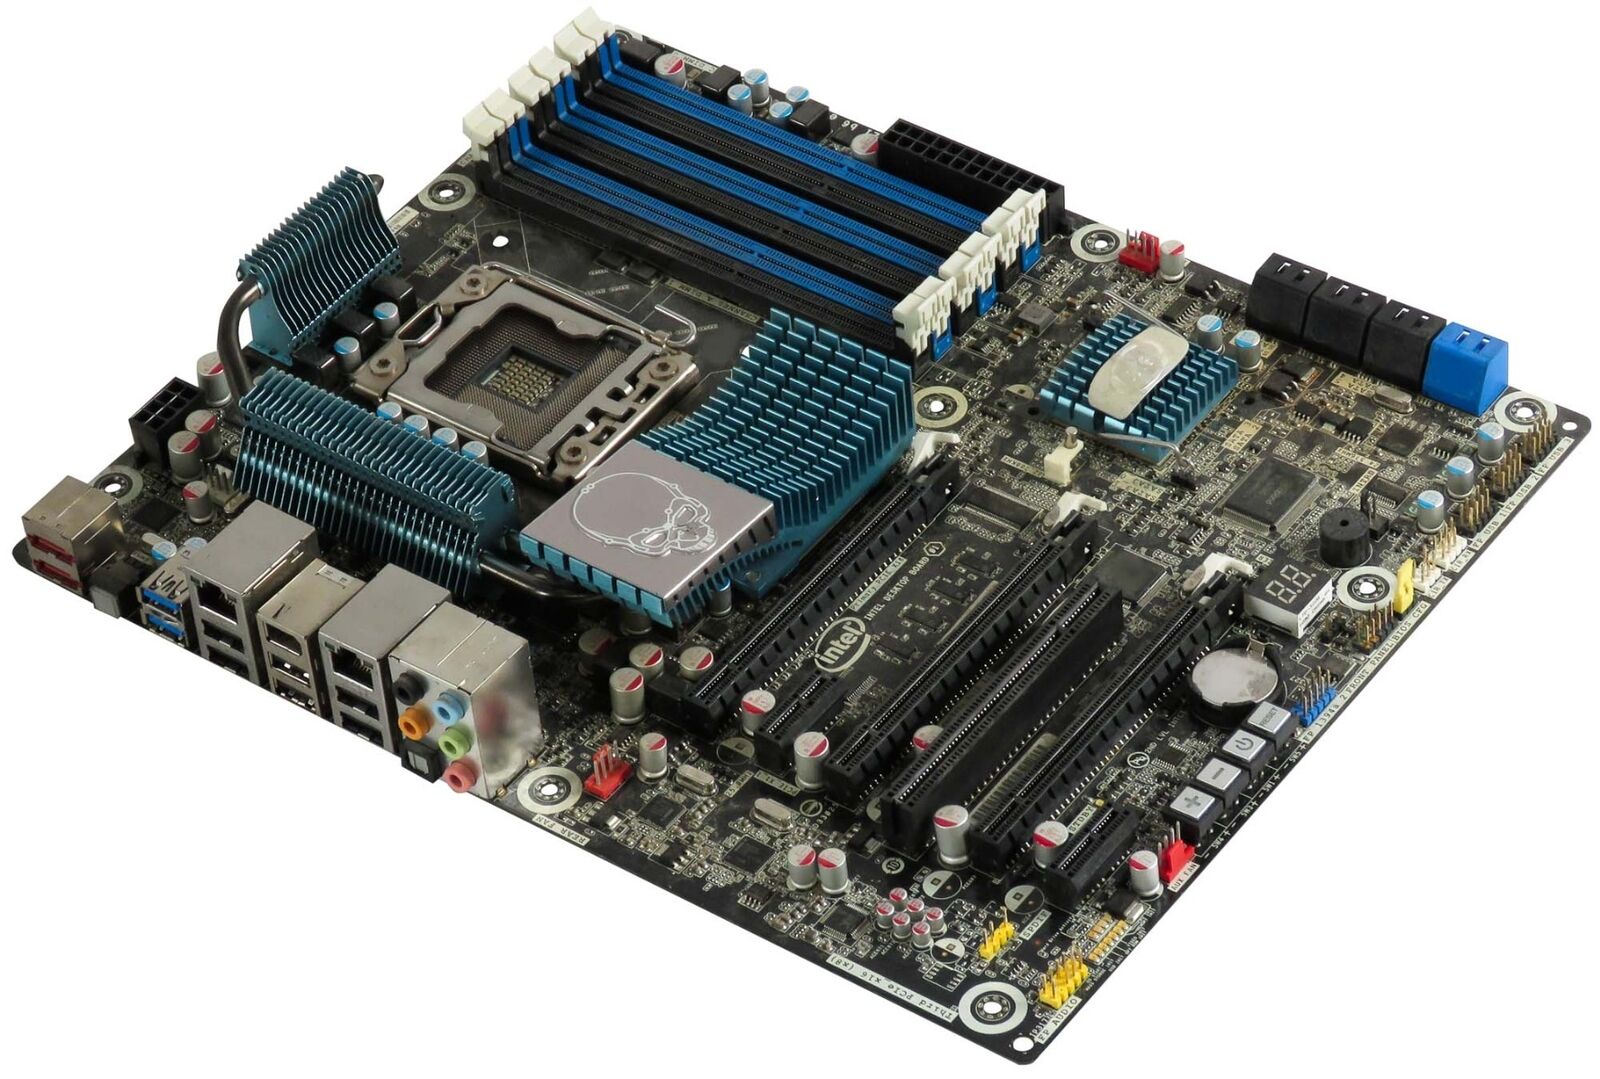 Motherboard Intel DX58SO2 G10925-205 LGA1366 6x DDR3 Pcie ATX